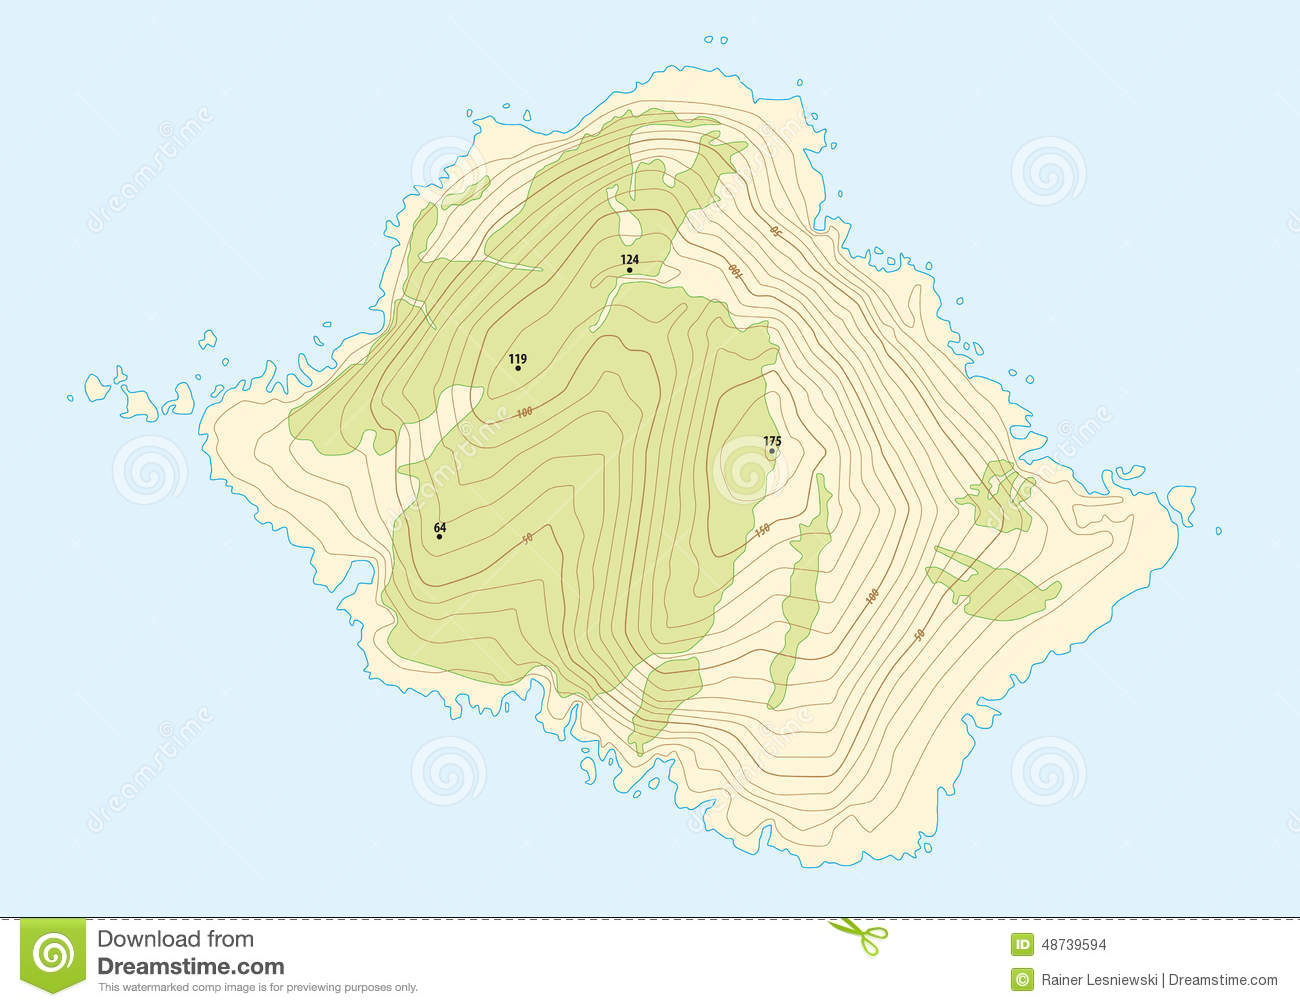 topographic-map-fictional-island-eps-48739594.jpg